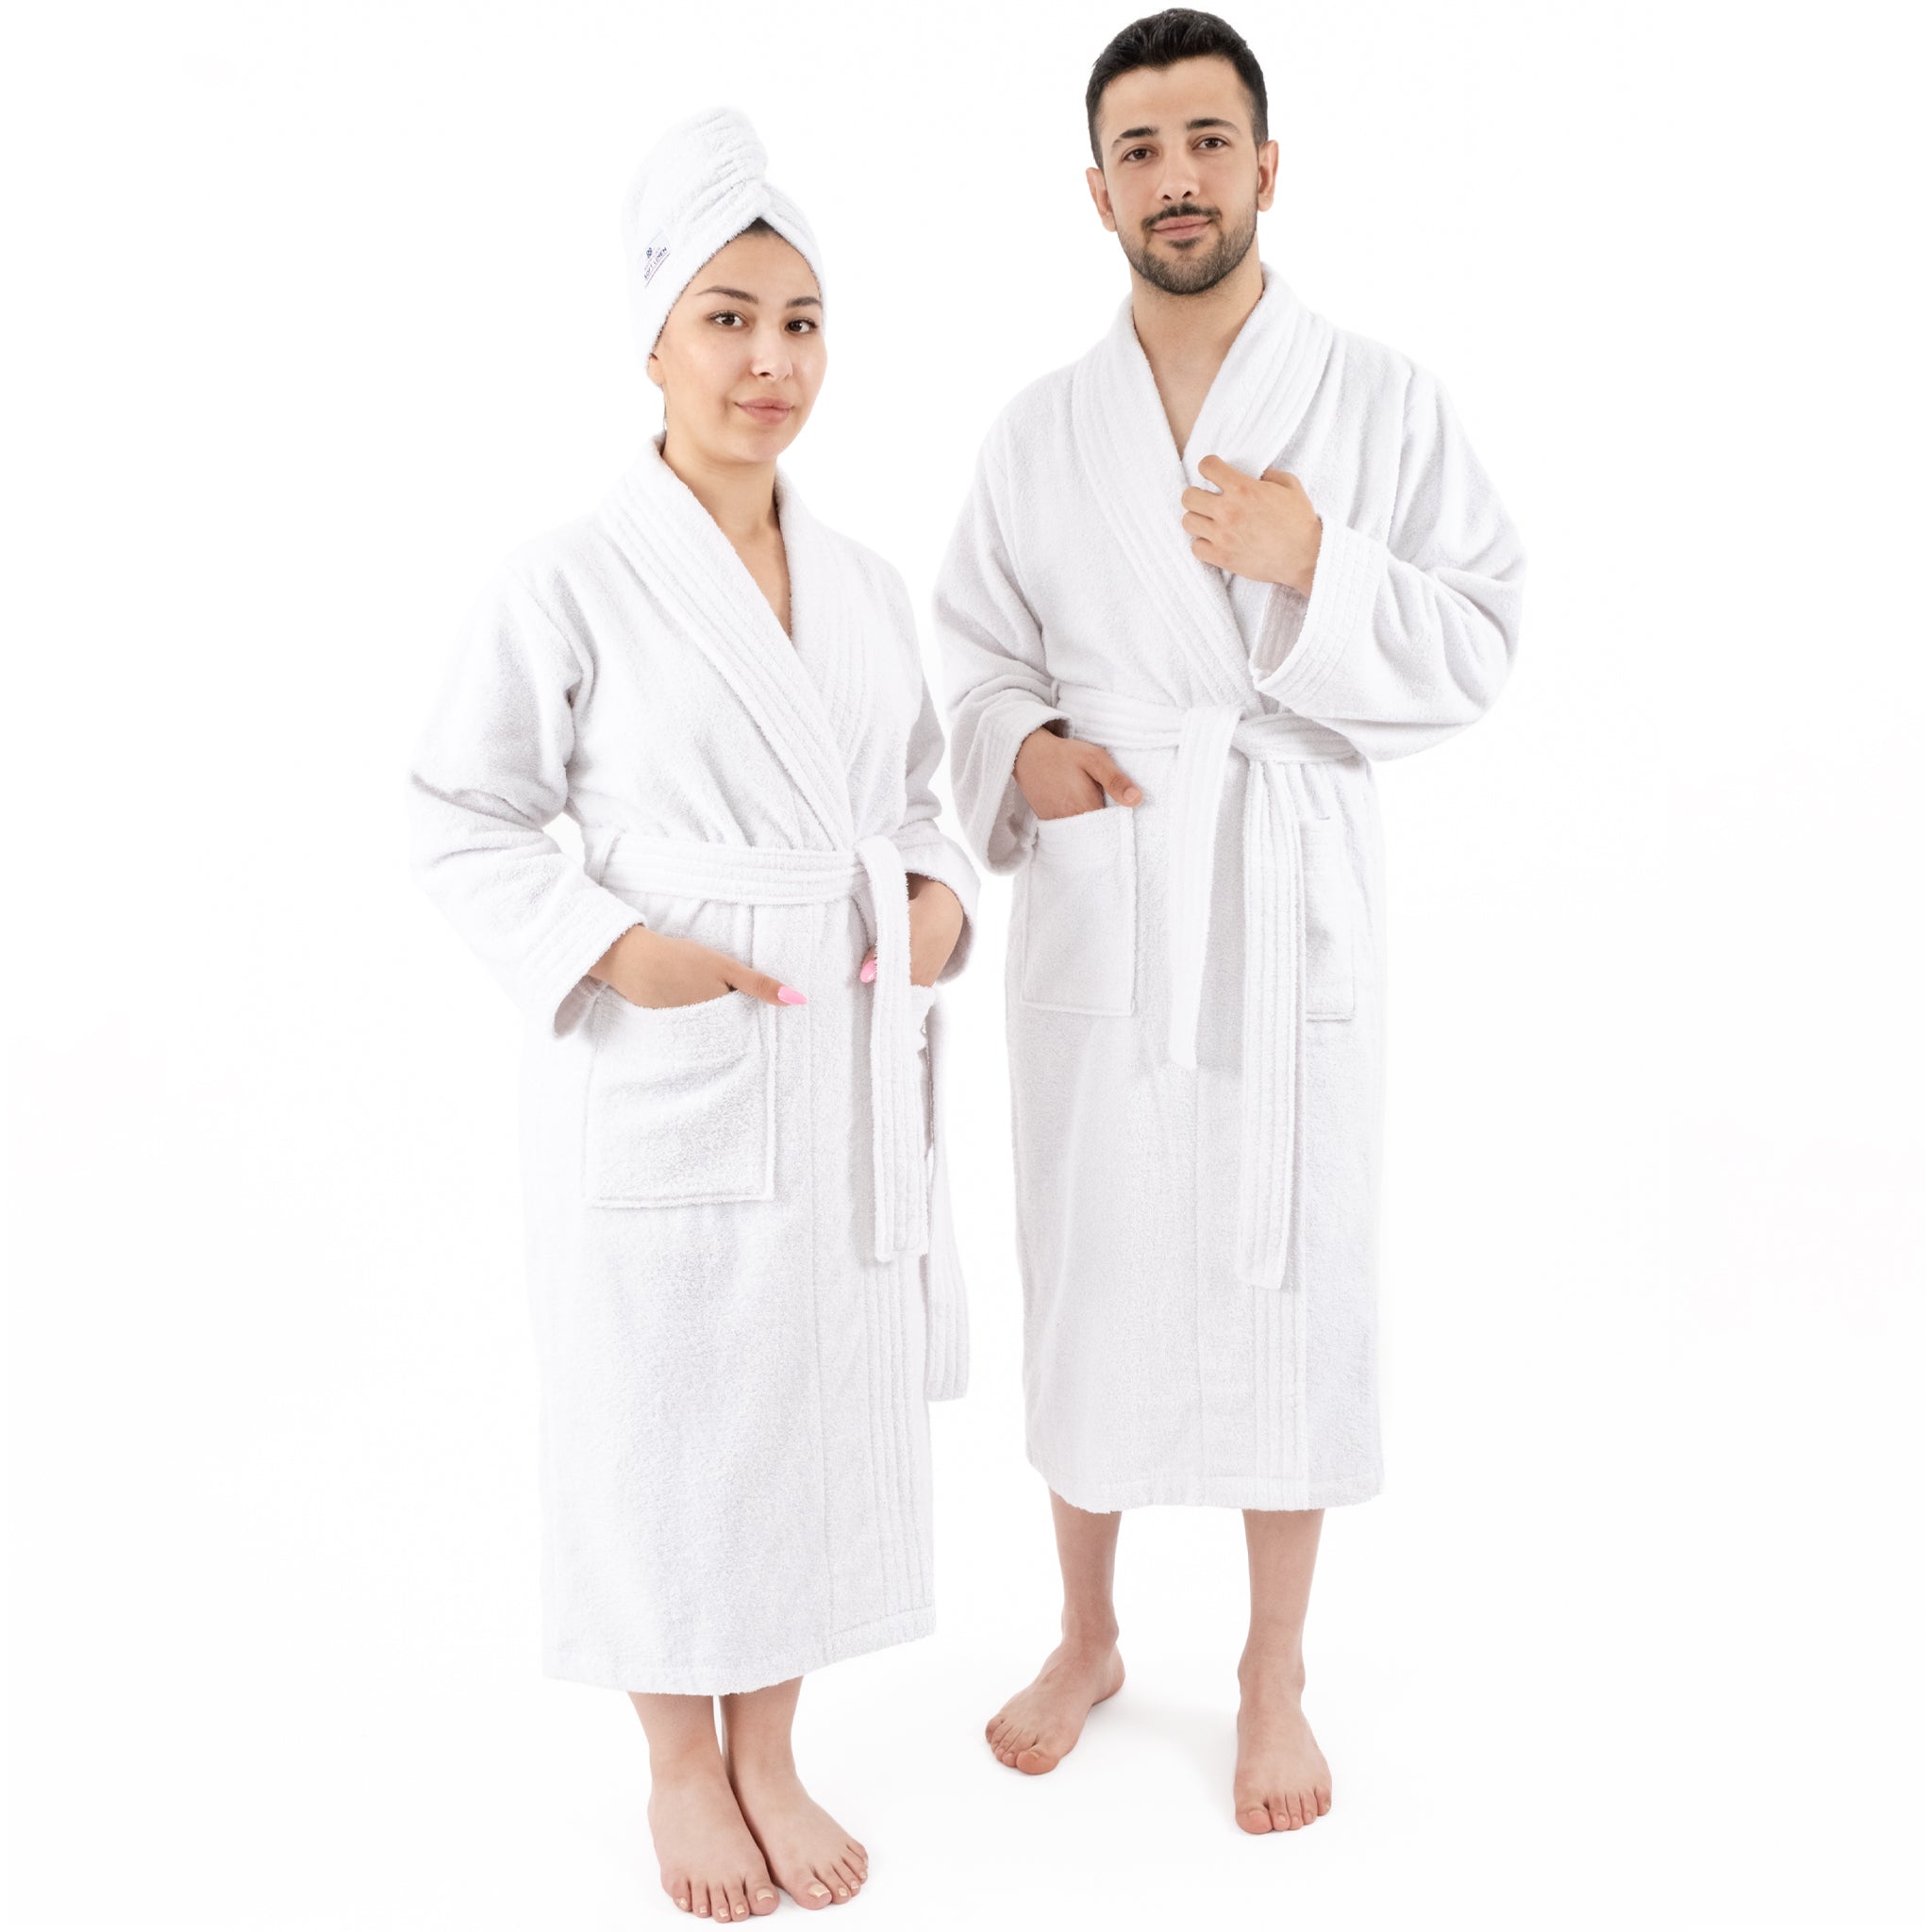 American Soft Linen 100% Cotton Bathrobes for Women and Men, Soft, Lightweight, Wholesale Bathrobes White S-M, 1